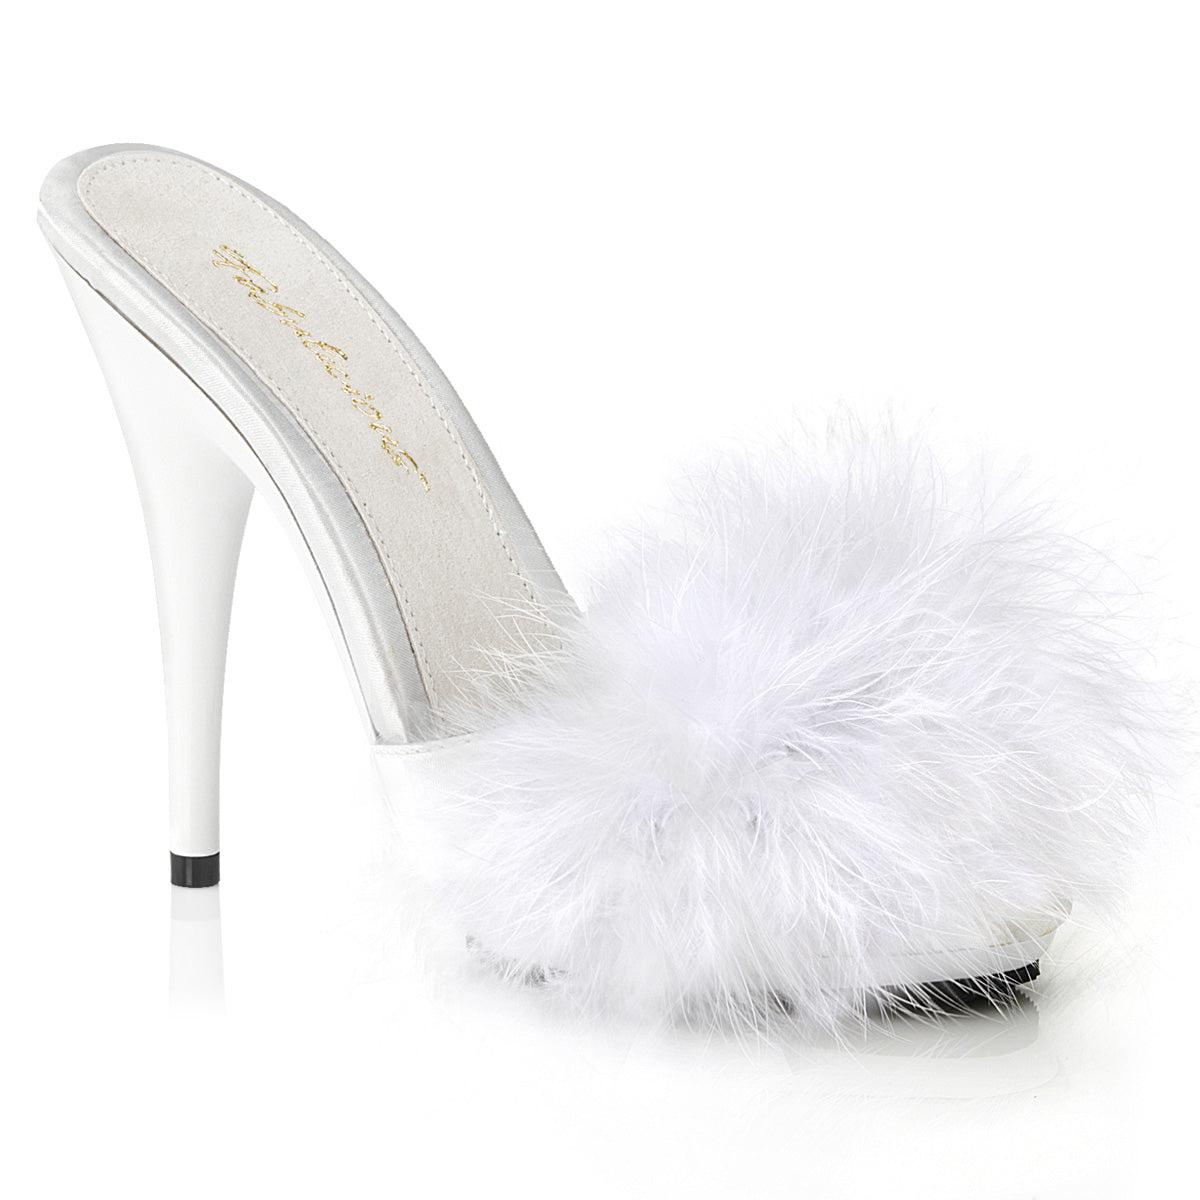 POISE-501F Fabulicious 5 Inch Heel White Satin Fur Sexy Shoe